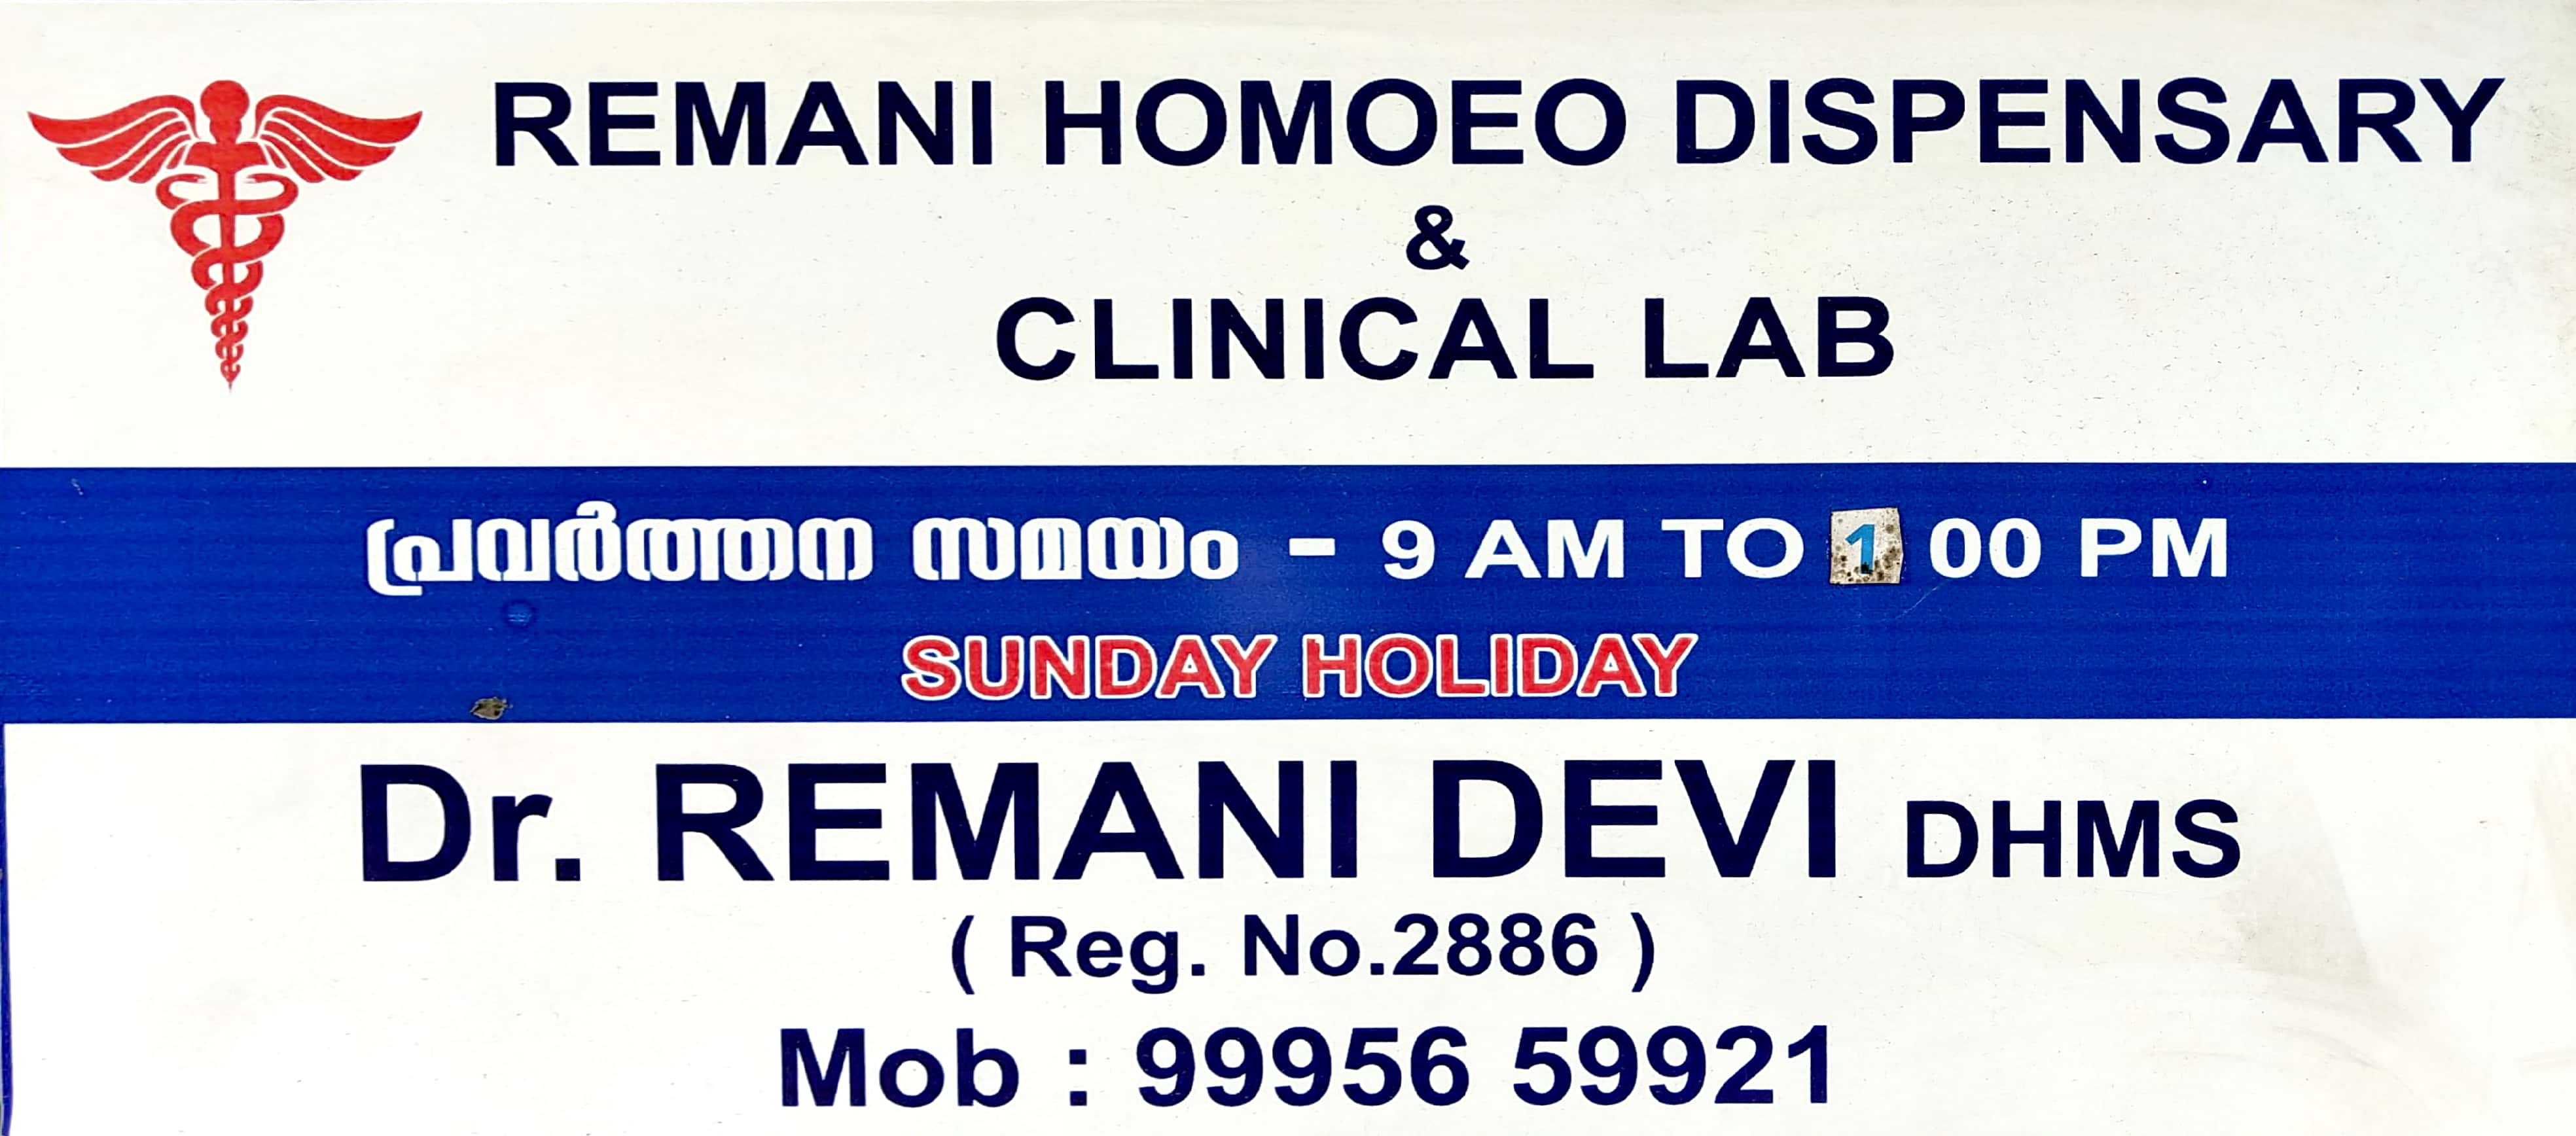 REMANI HOMOEO DISPENSARY, HOMEOPATHY HOSPITAL,  service in Thrippunithura, Ernakulam